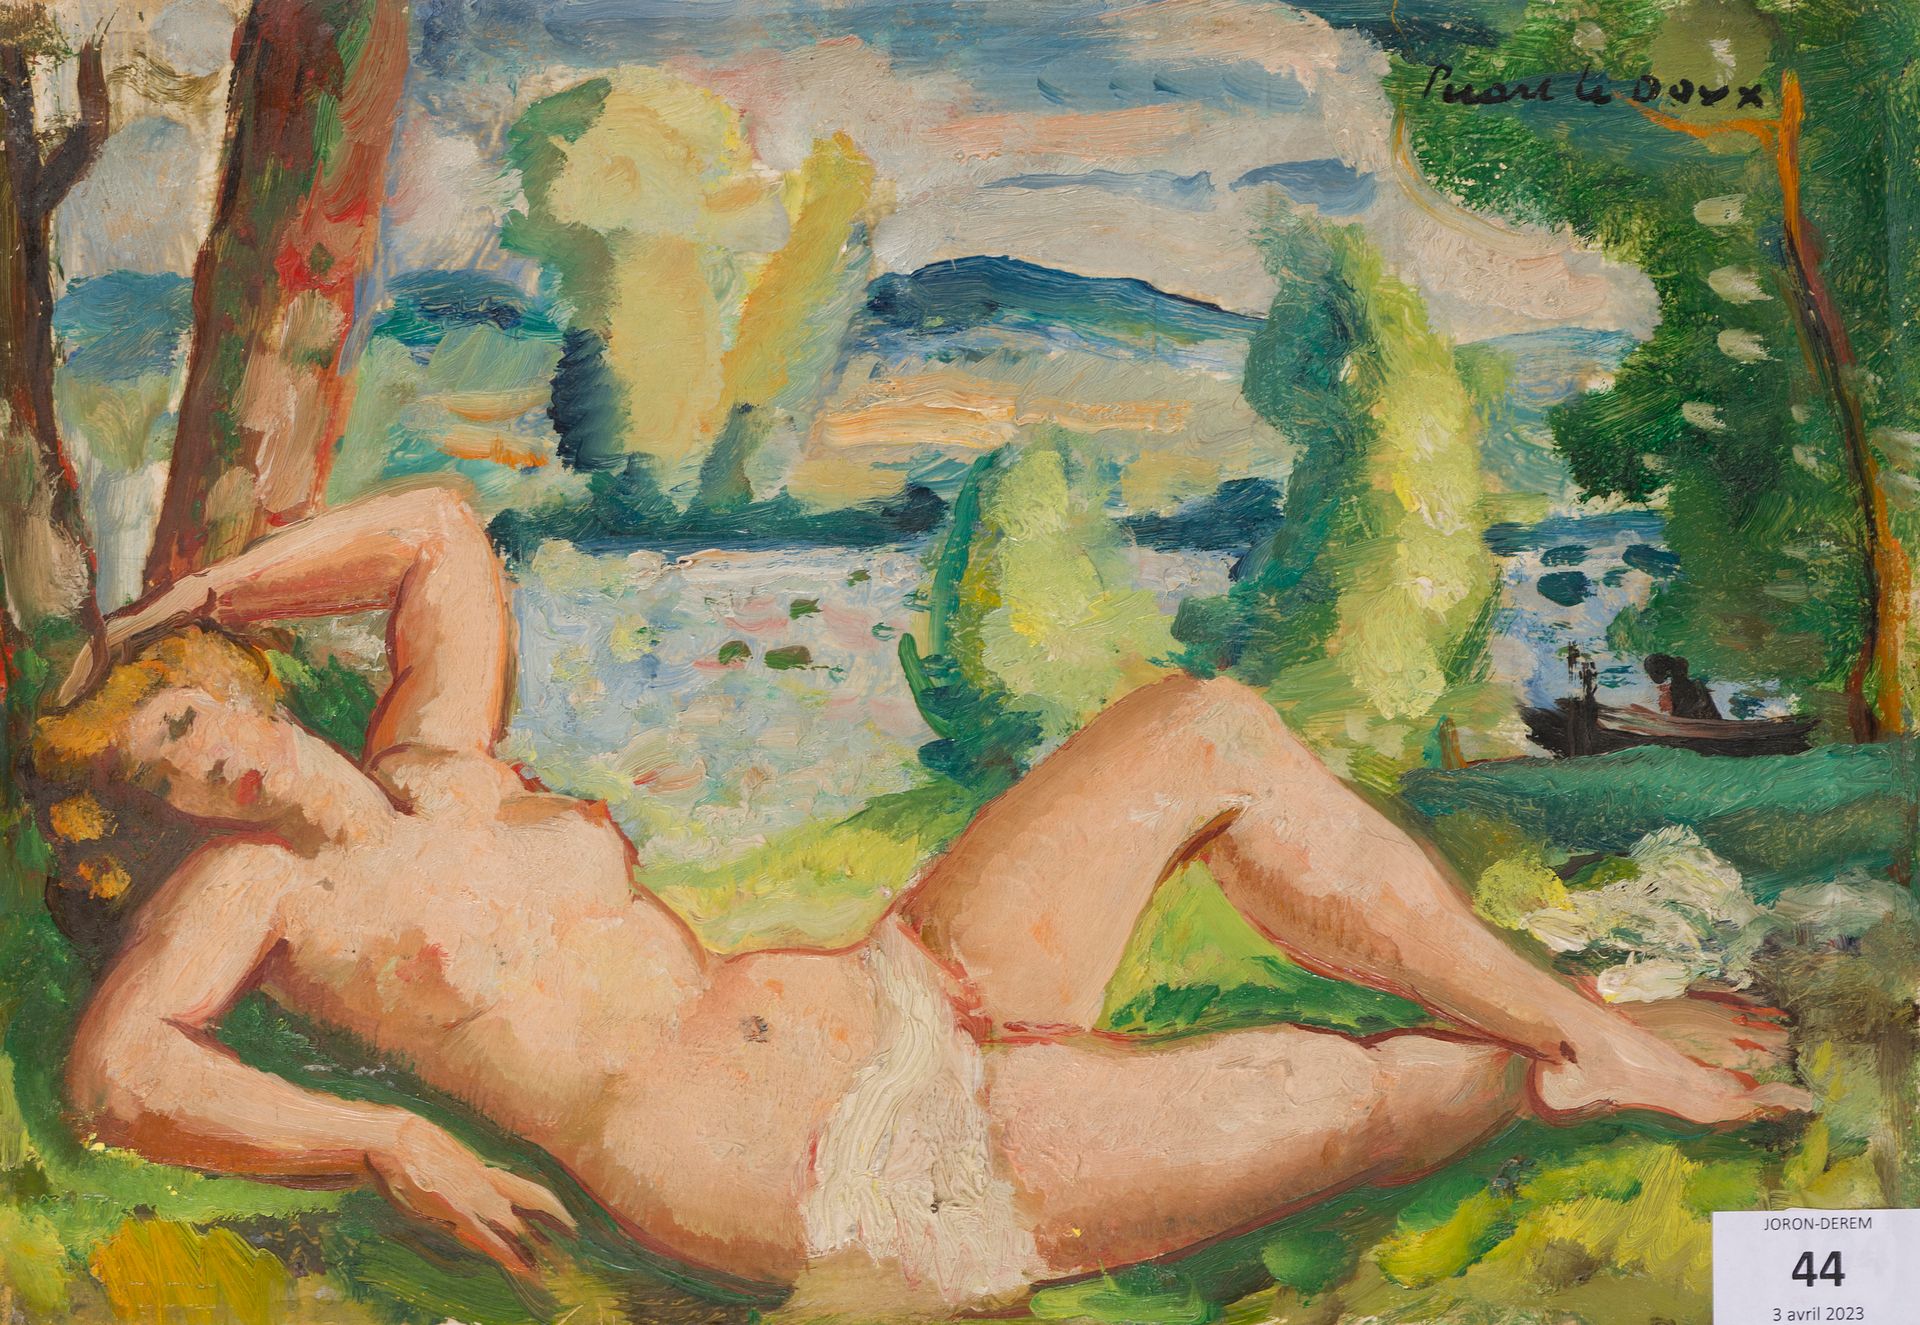 Null 查尔斯-皮卡特-勒杜(1881-1959)
裸体研究，1943年
板面油画，右上角有签名
24 x 35 cm